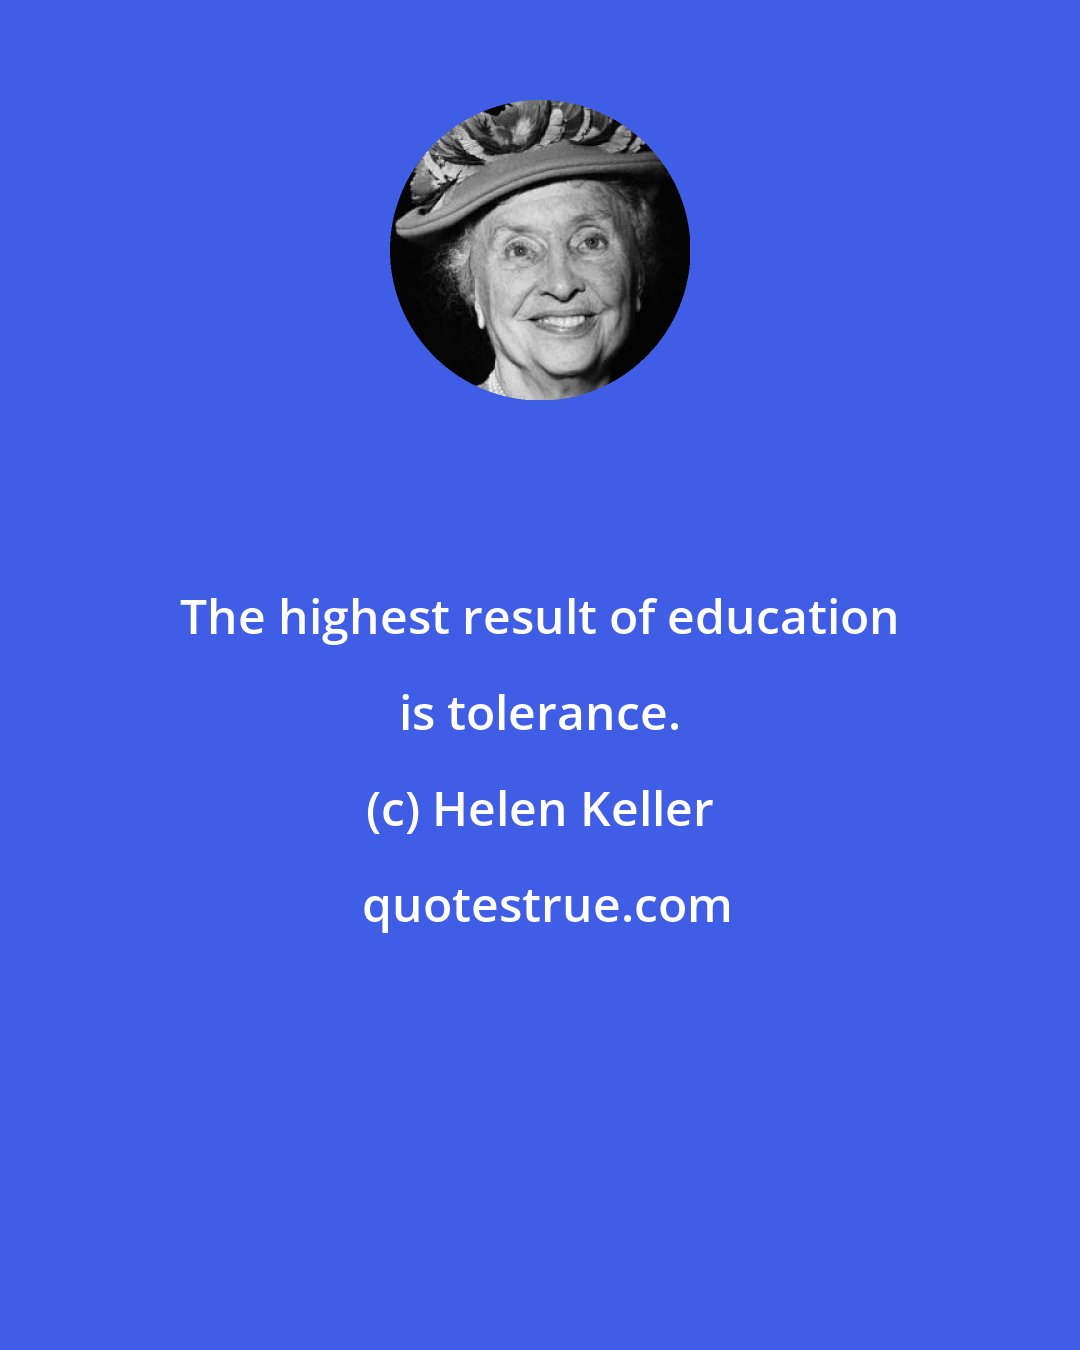 Helen Keller: The highest result of education is tolerance.